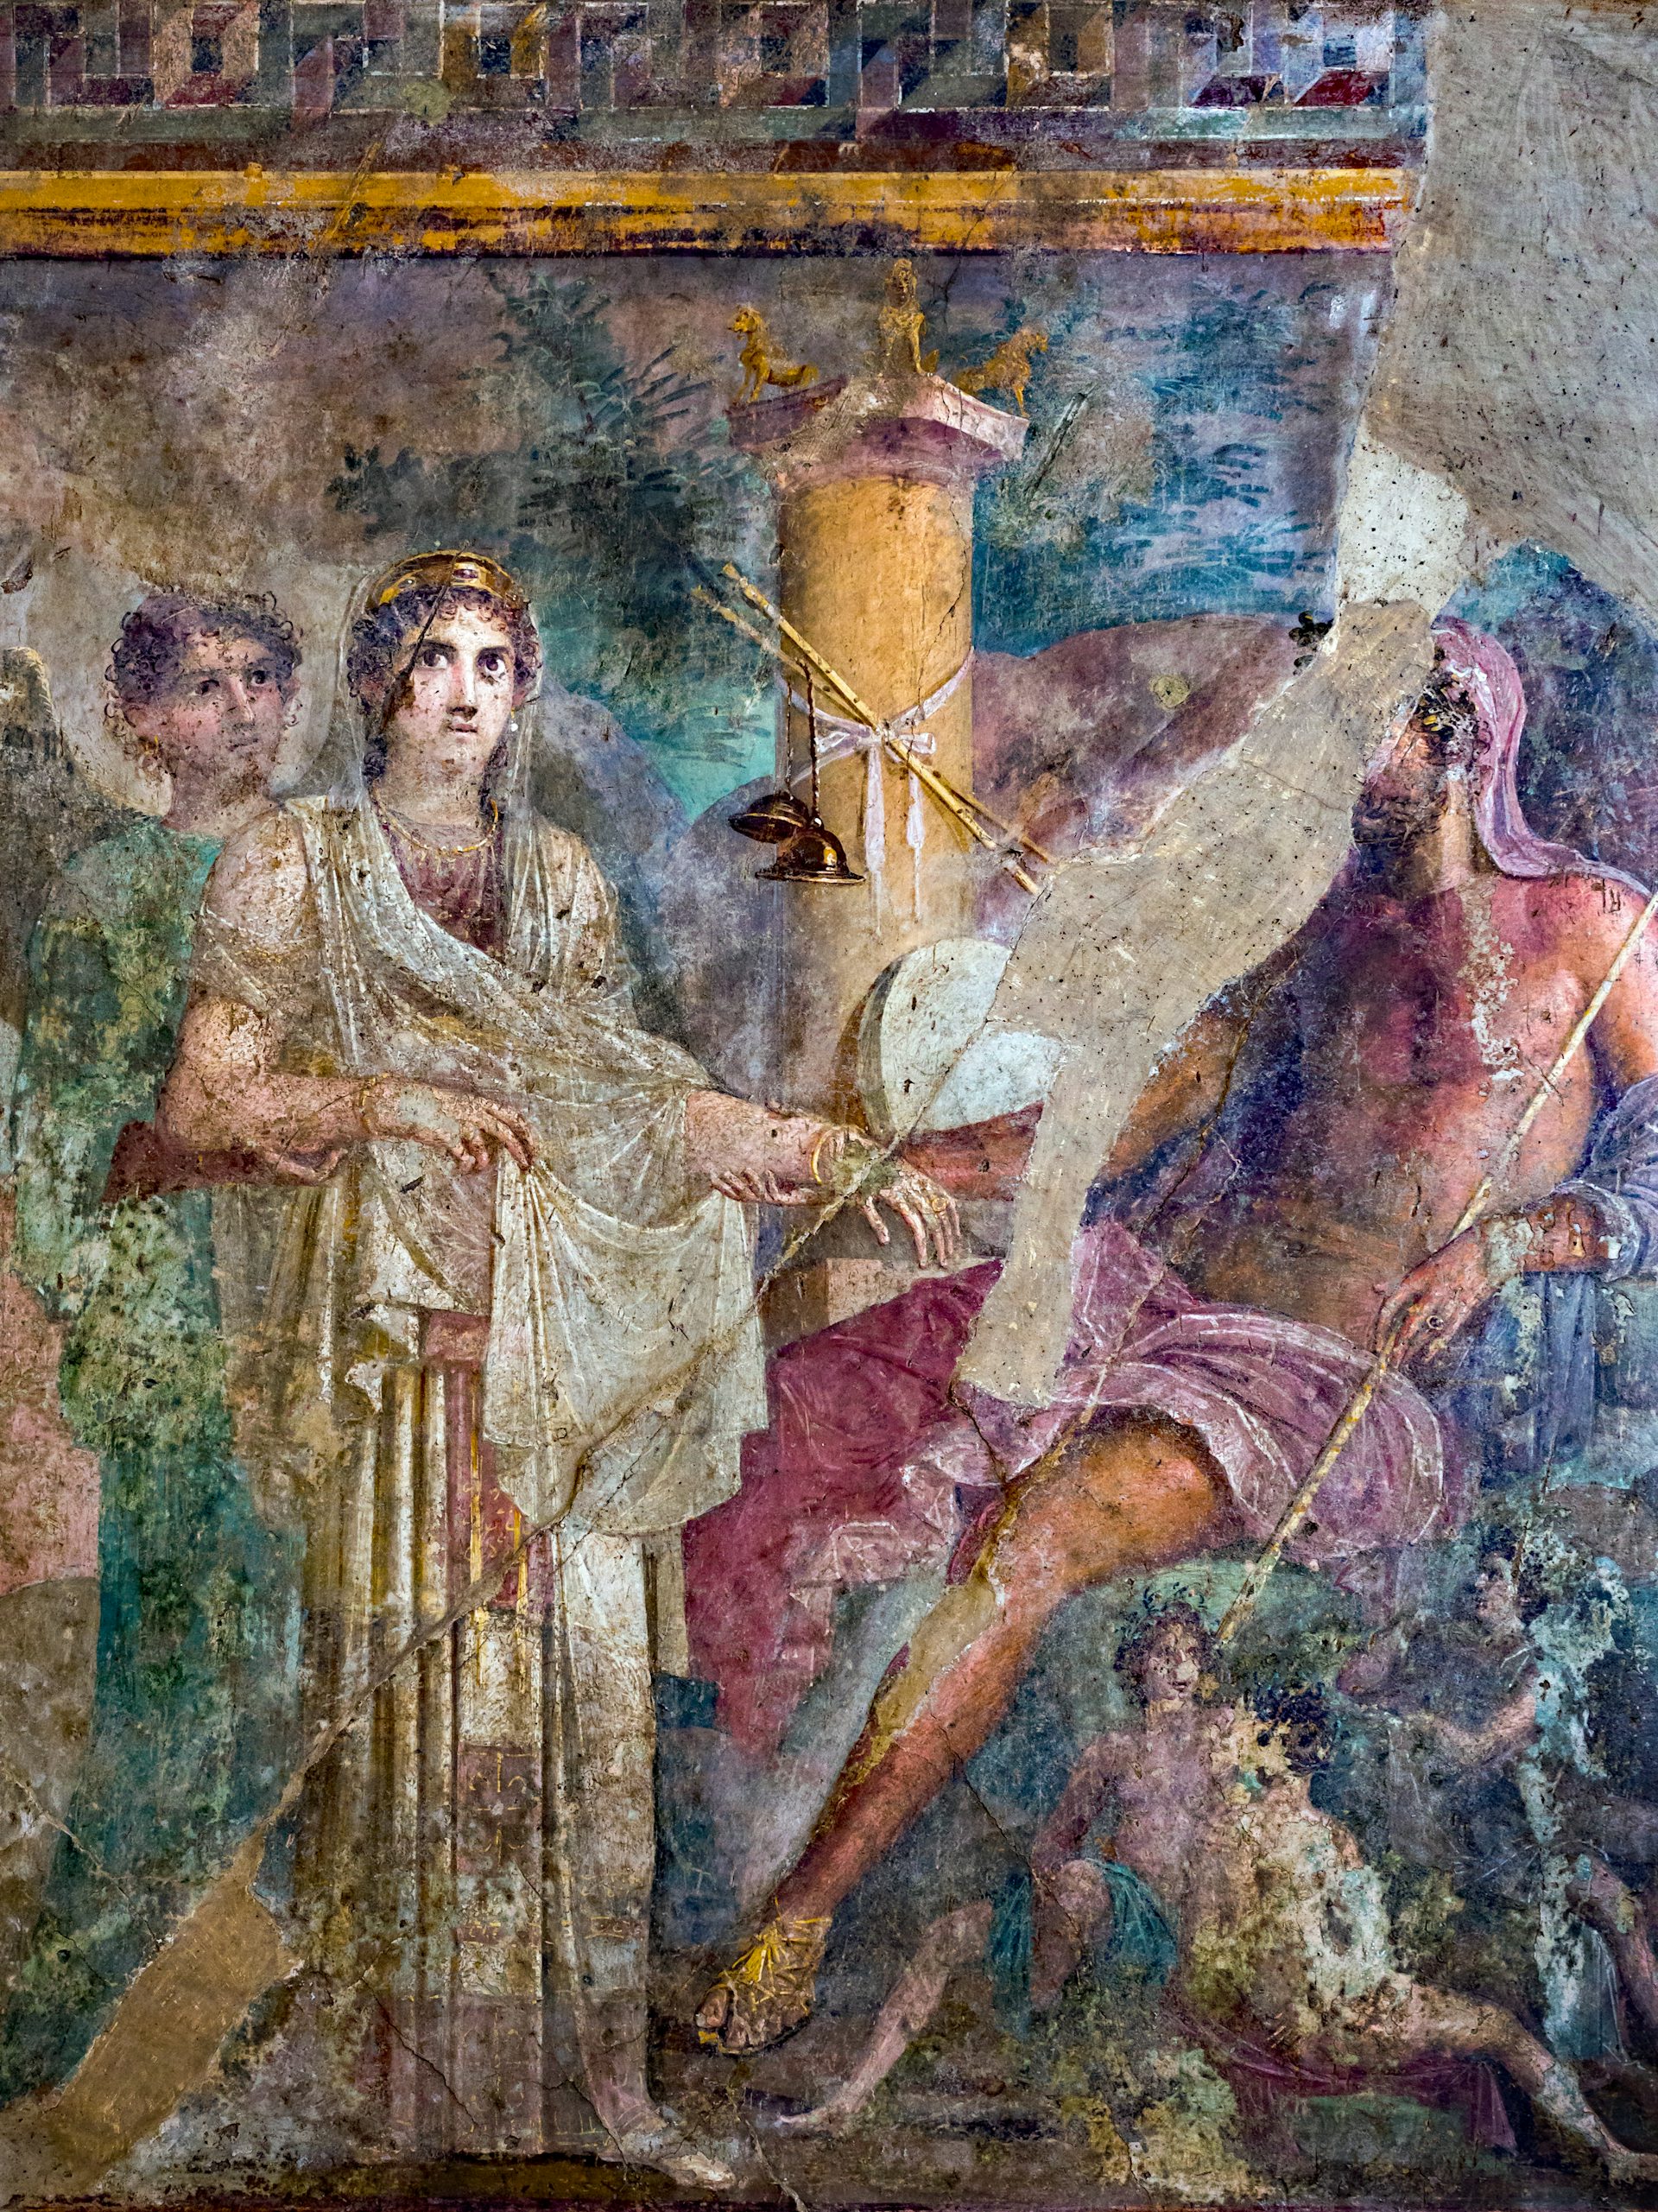 Fresco of the marriage of Zeus and Hera